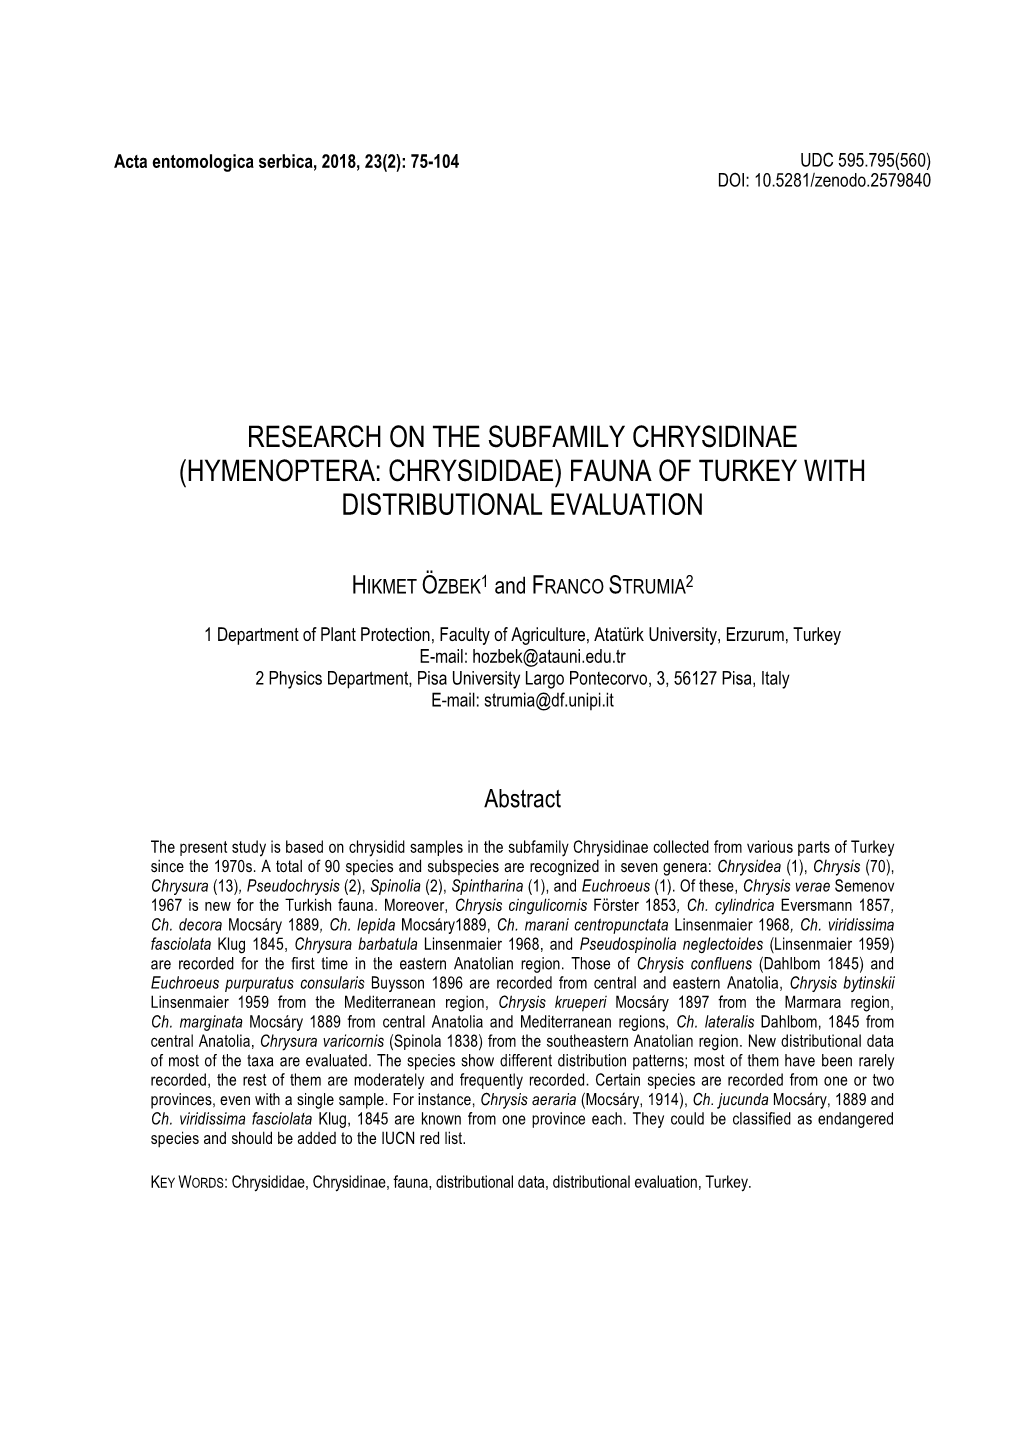 Research on the Subfamily Chrysidinae (Hymenoptera: Chrysididae) Fauna of Turkey with Distributional Evaluation